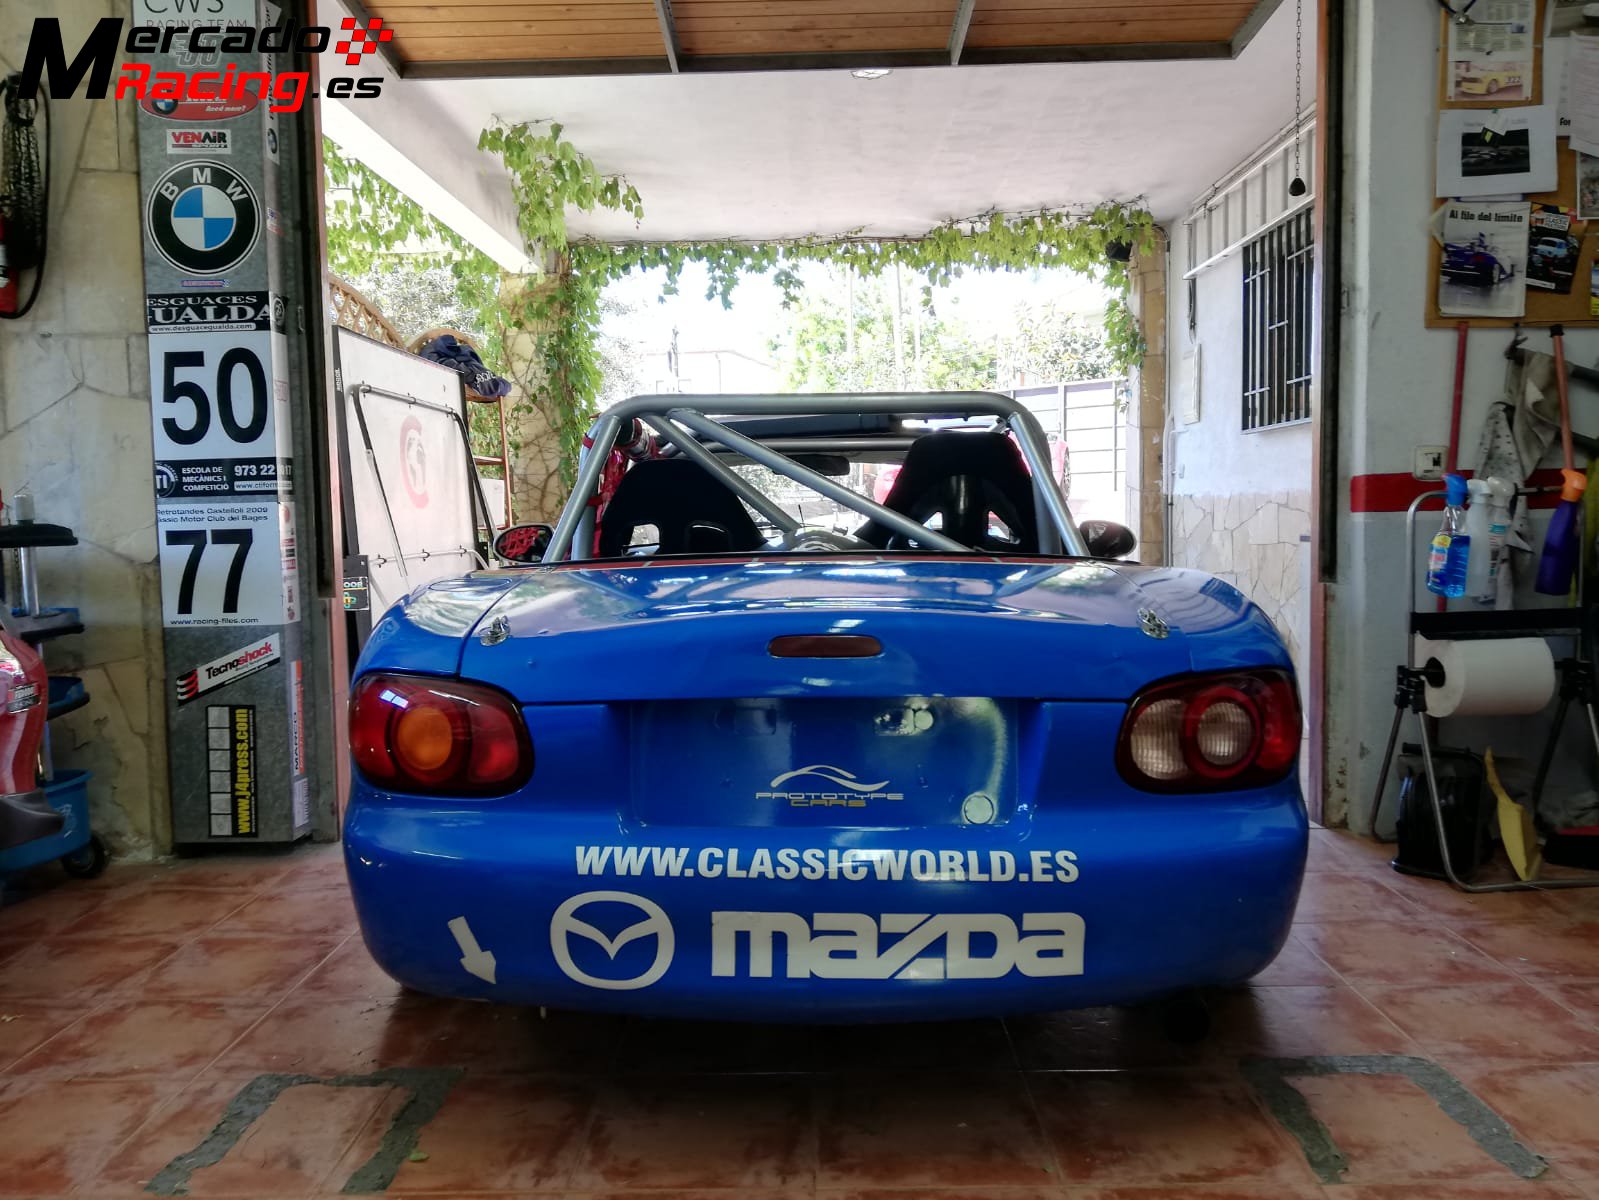 Mazda mx5 cup